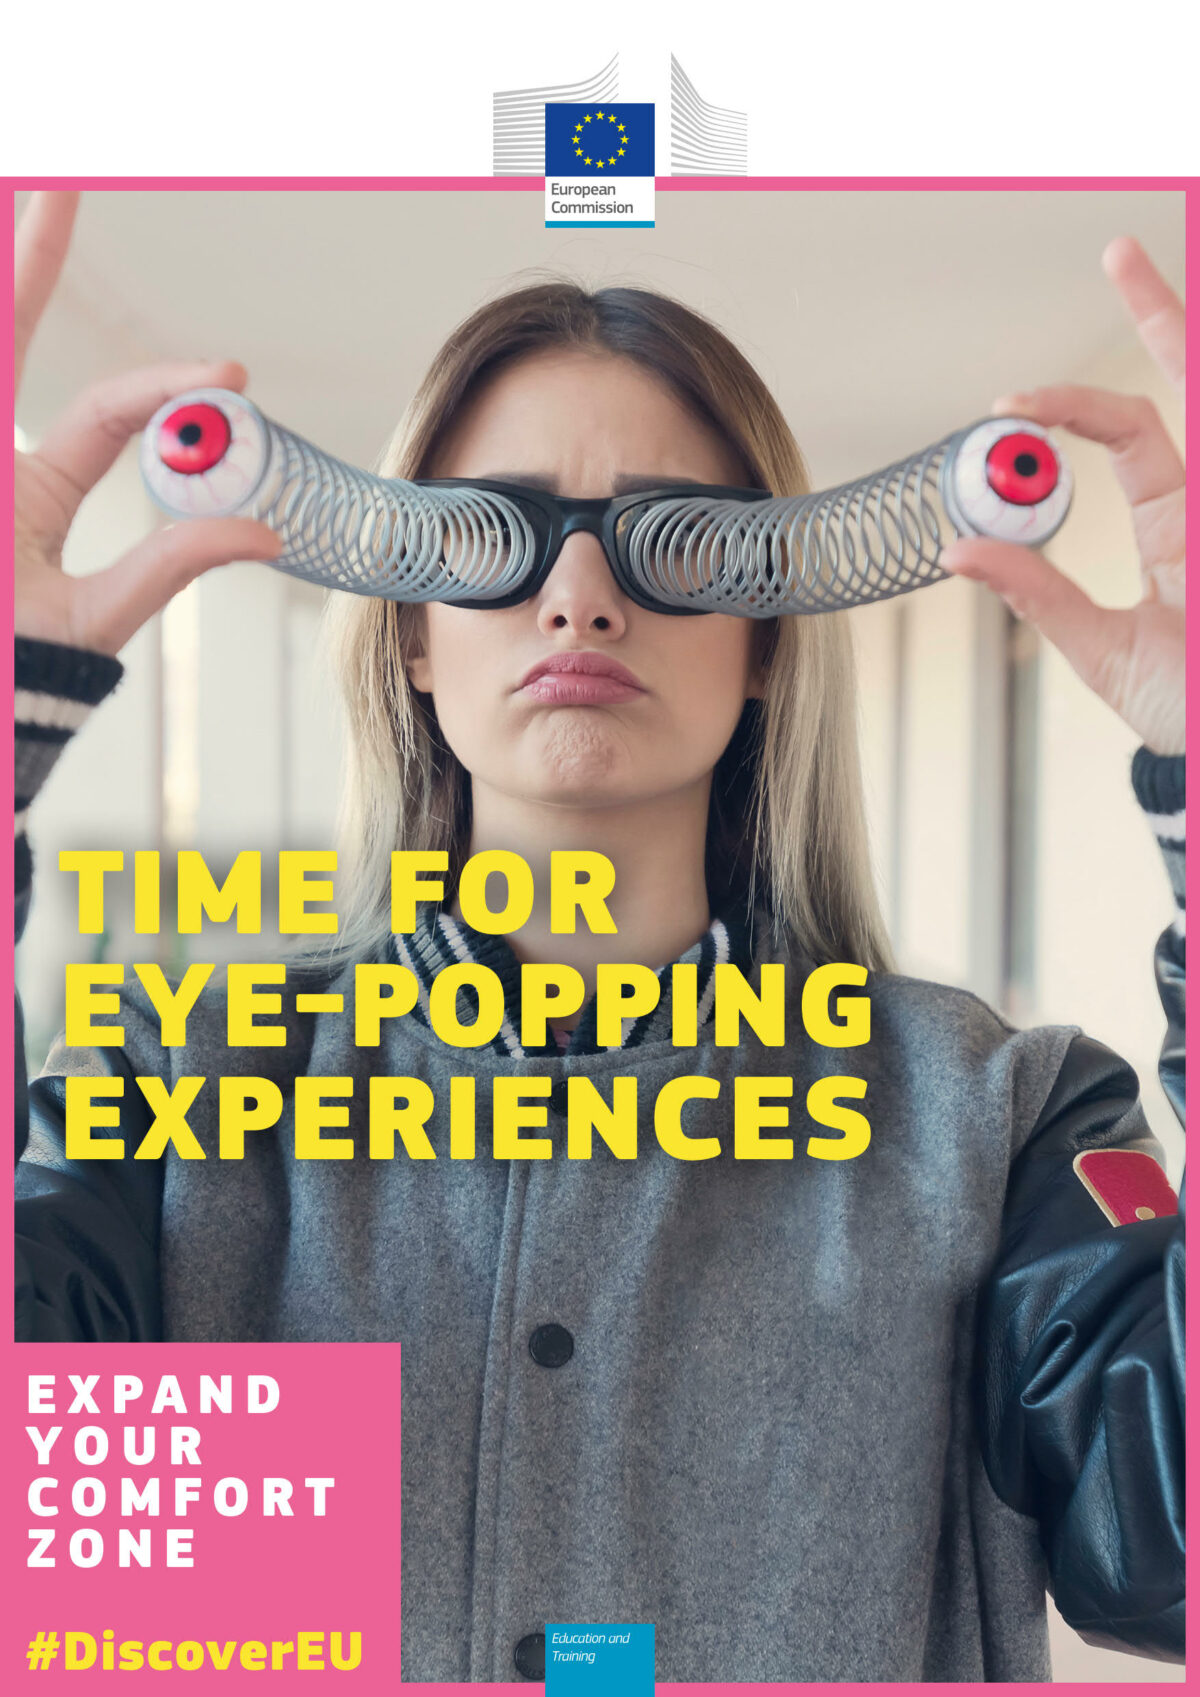 Nuori, jolla pilailulasit. Teksti: Time for eye-popping experiences